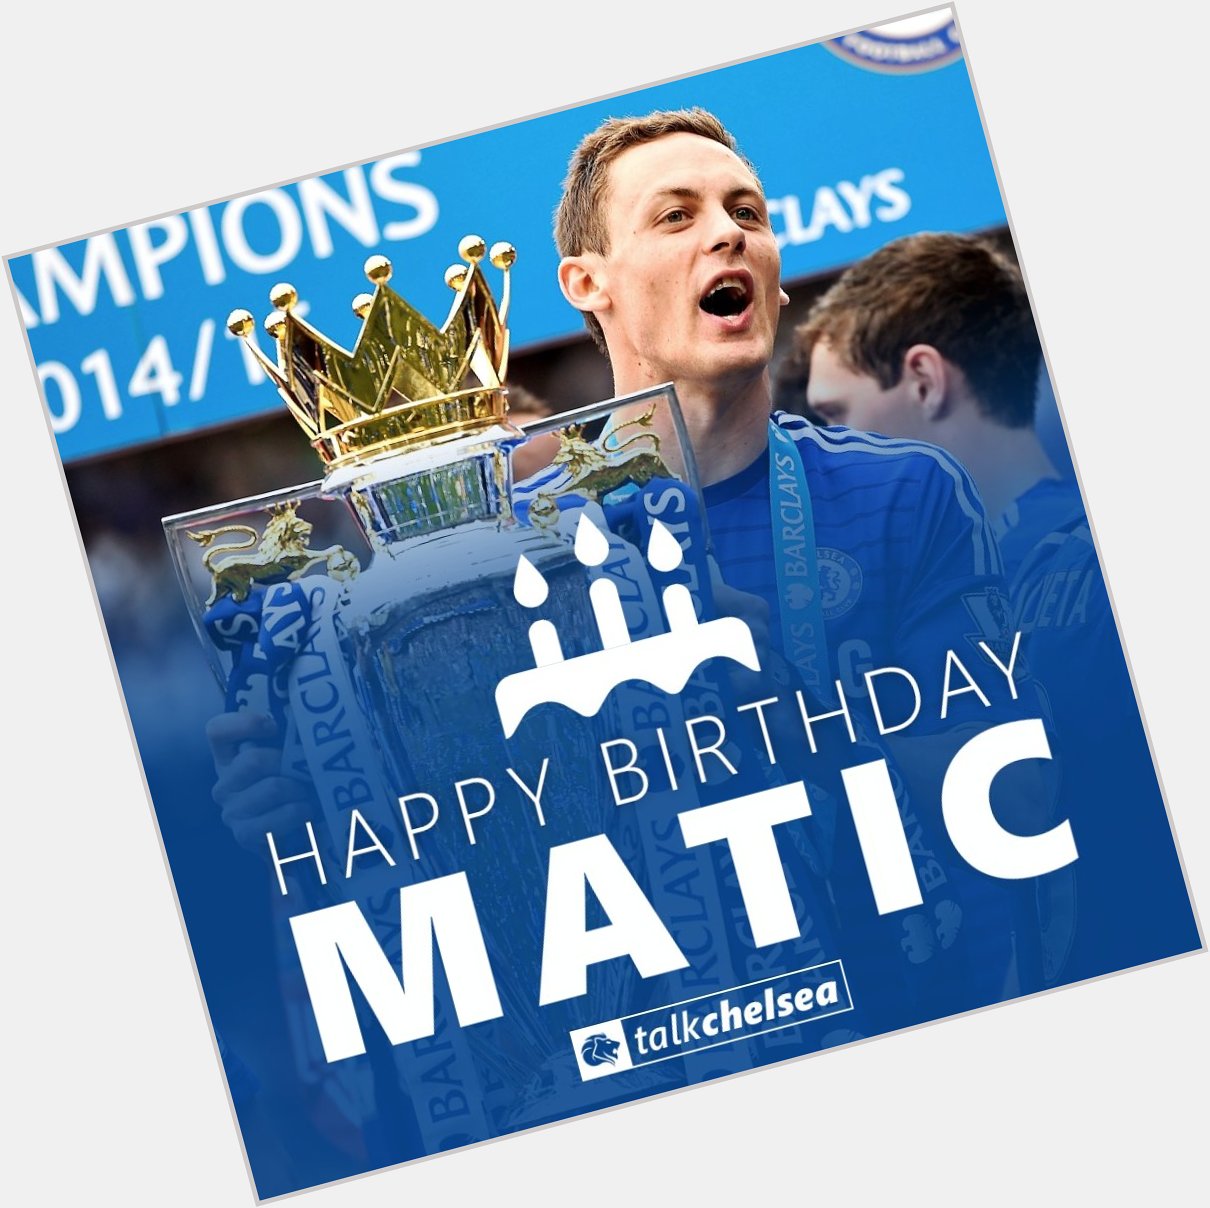 Wishing a very happy birthday to two-time Chelsea Premier League winner Nemanja Matic! 